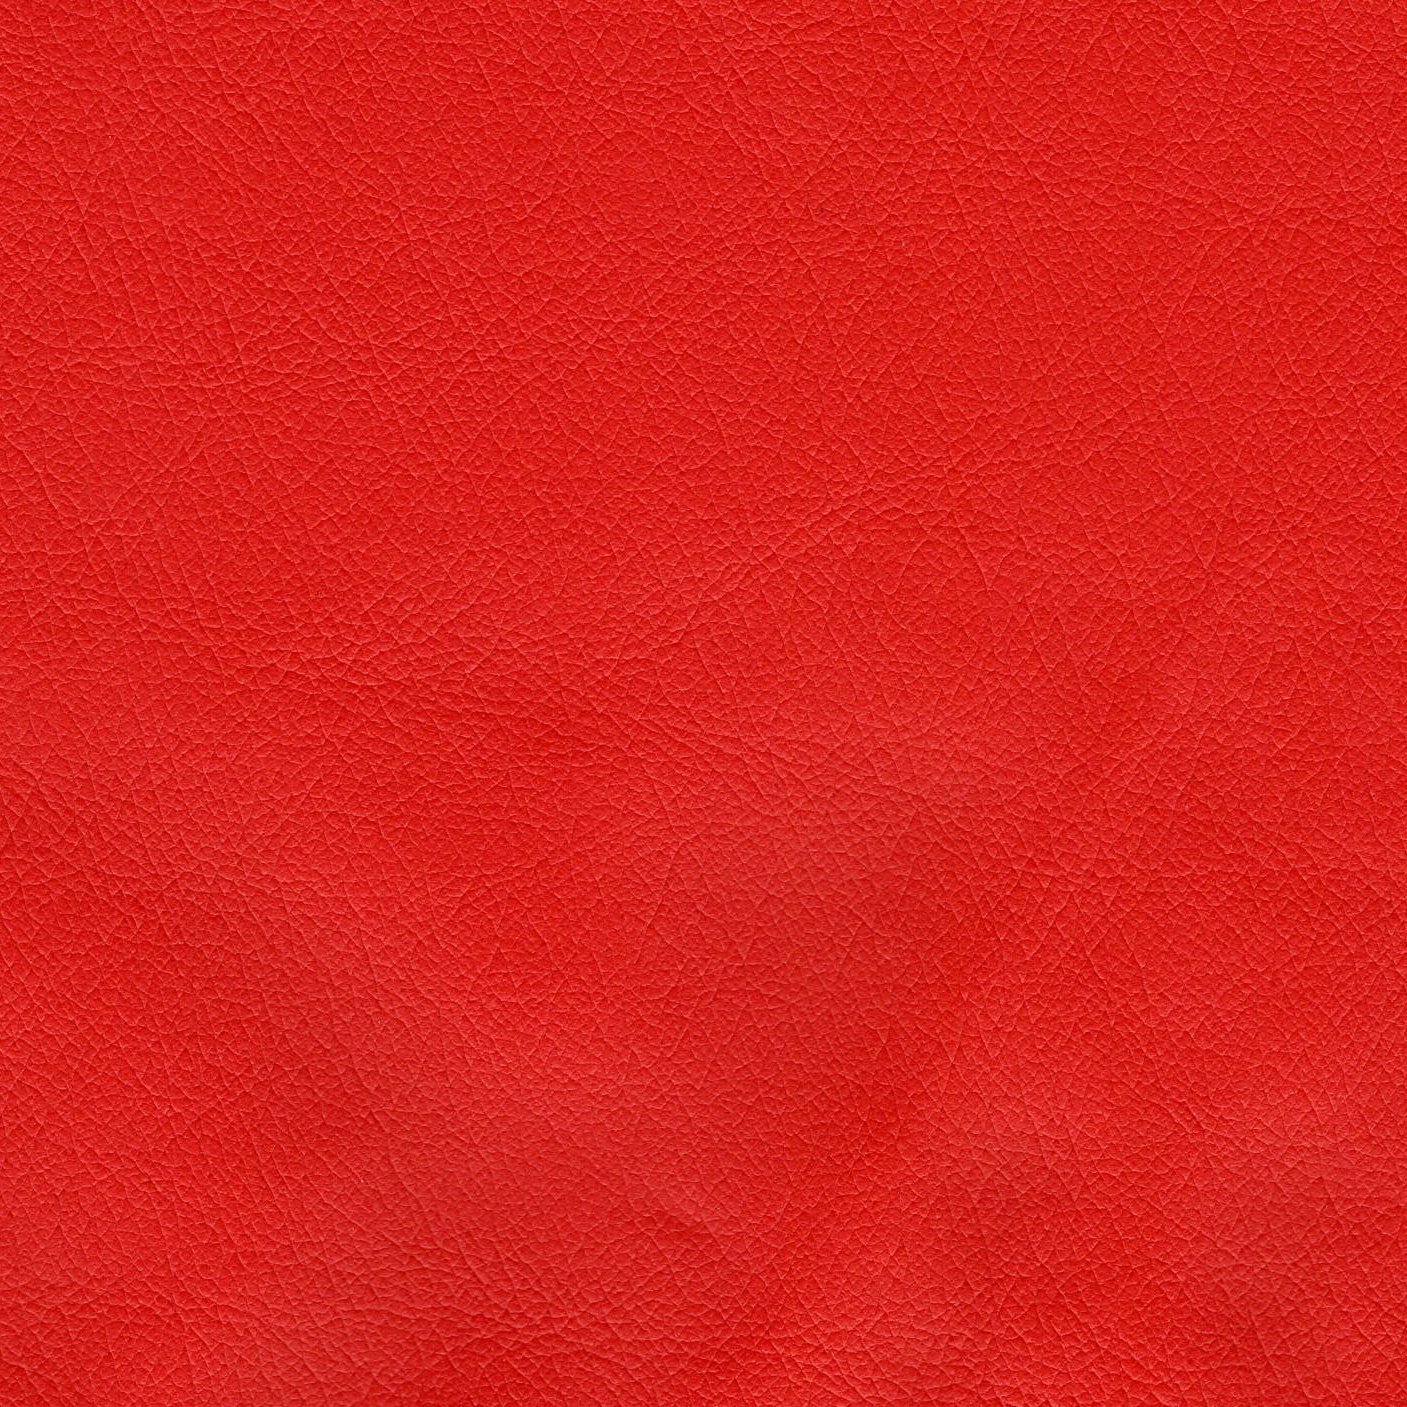 ULTRACUIR - 1176 RED (Copy) (Copy)